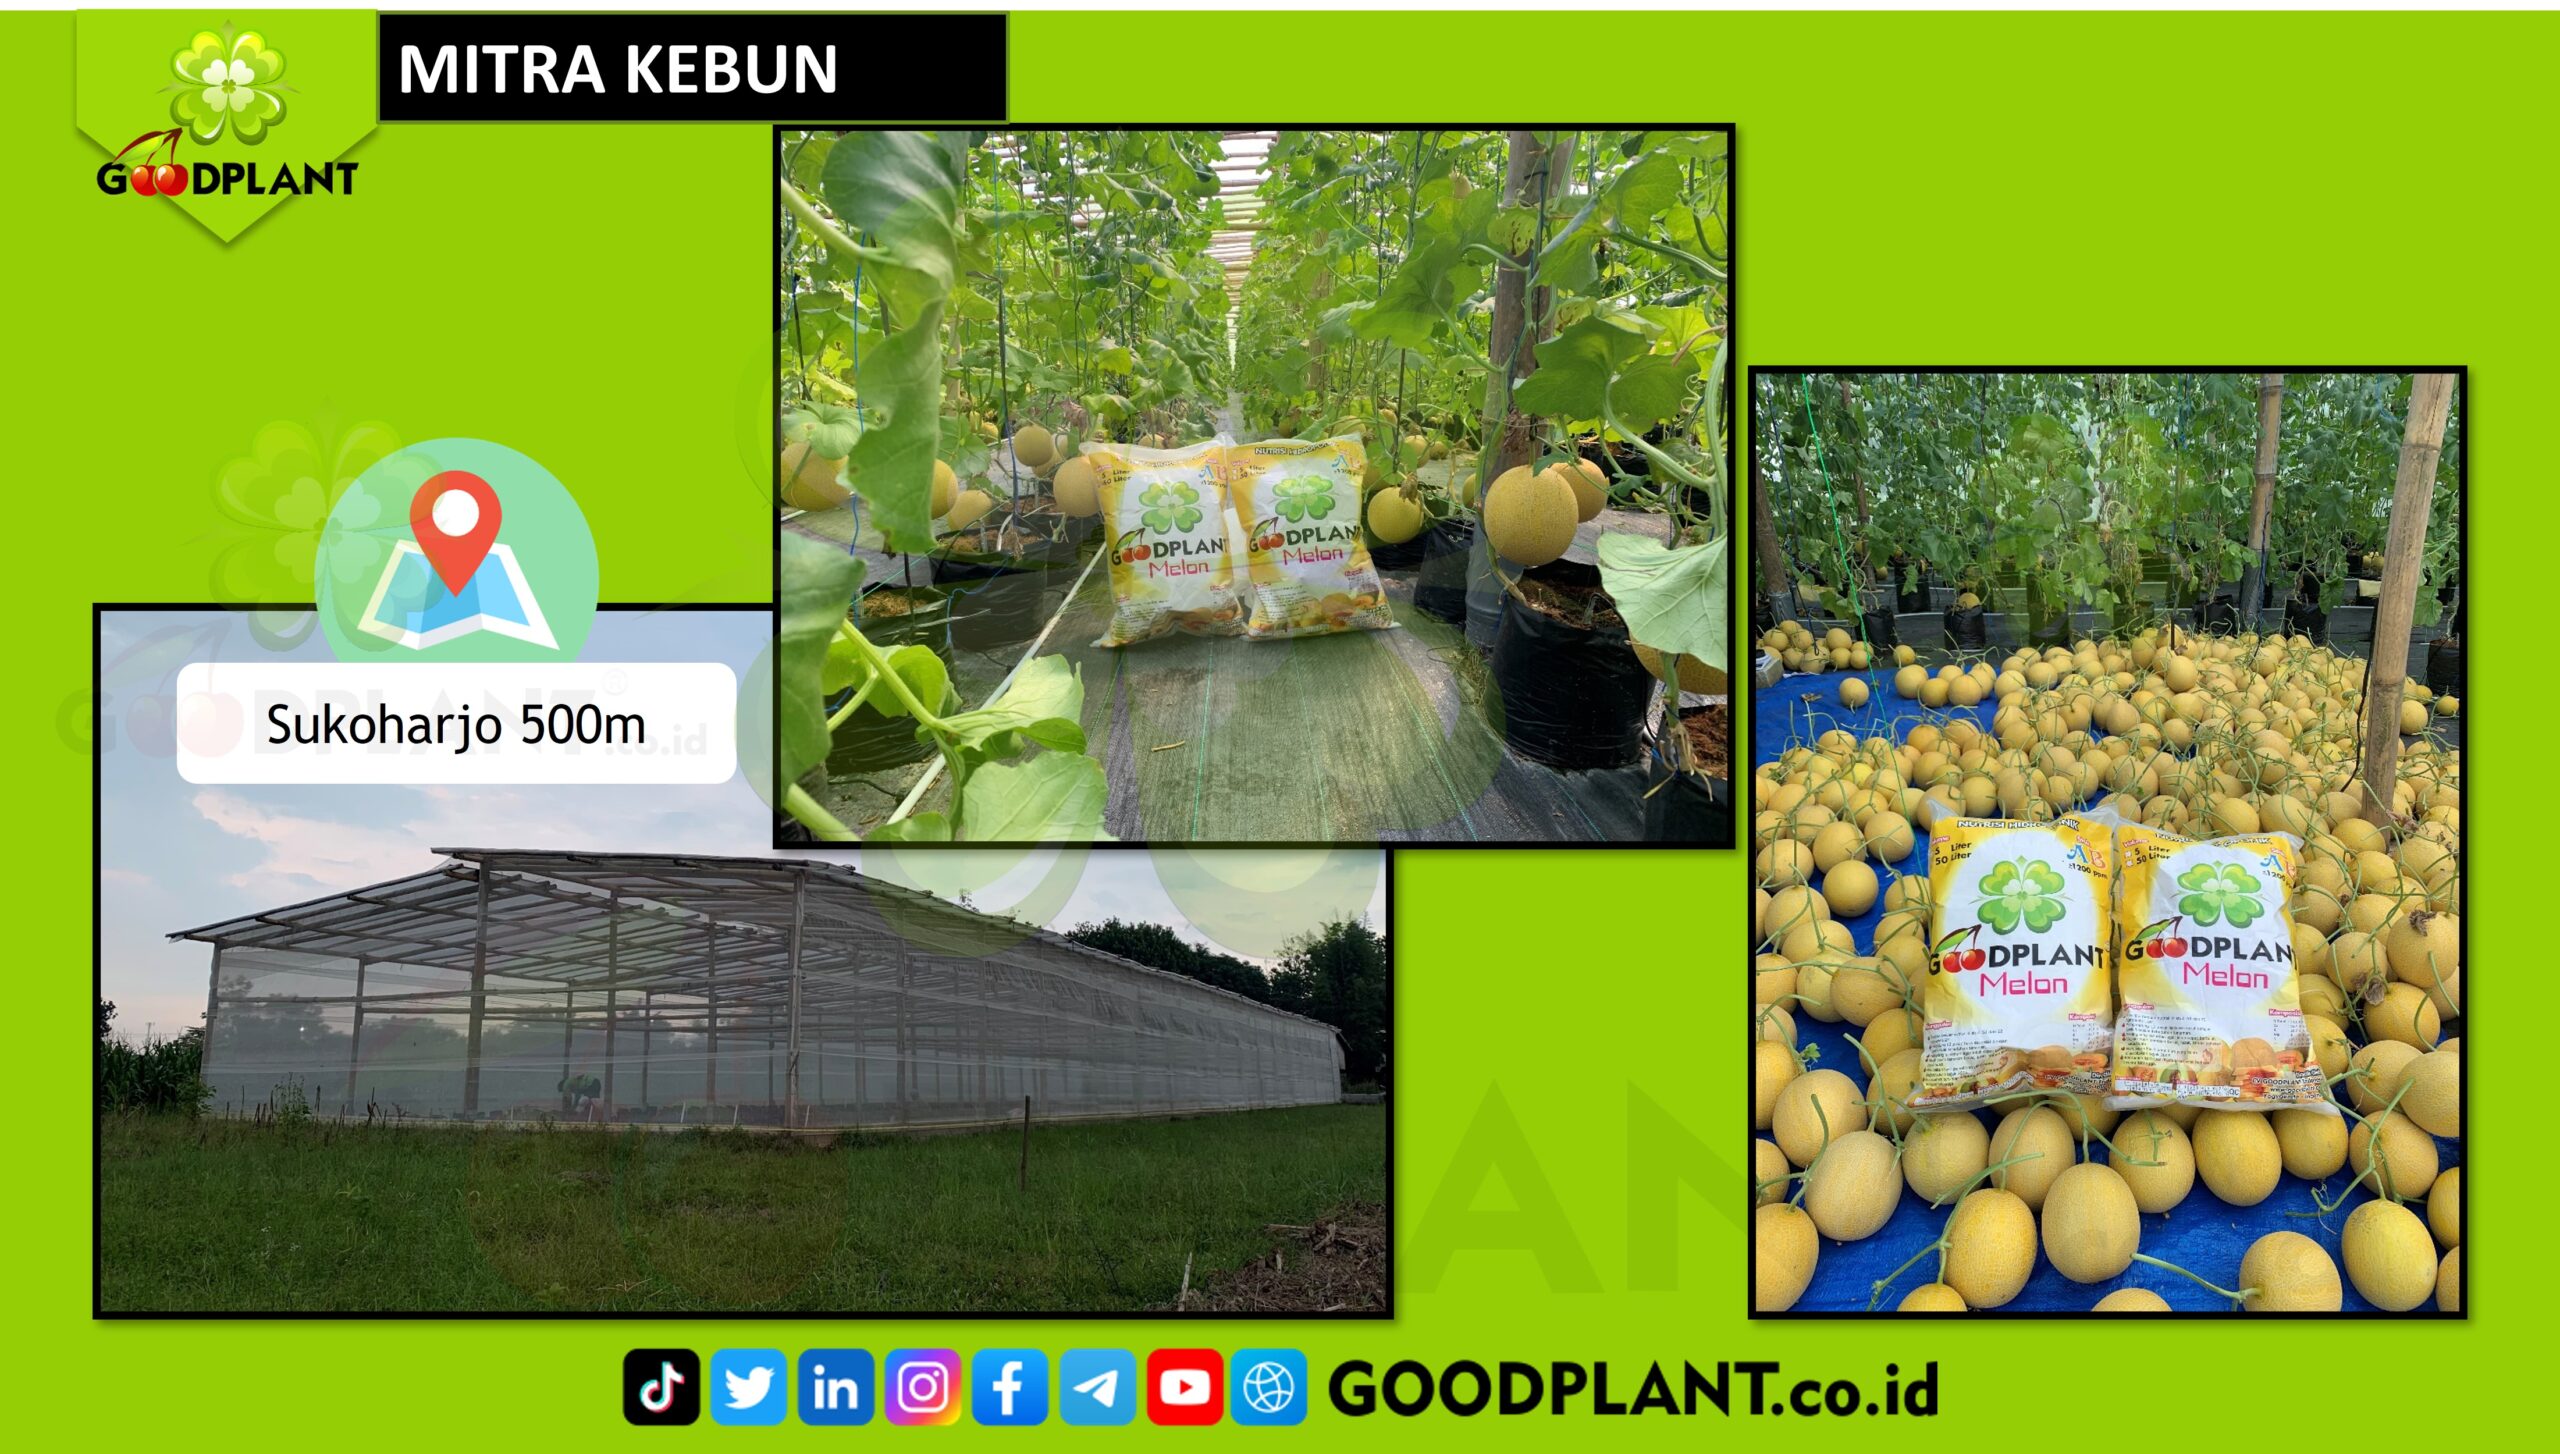 Pelatihan Hidroponik Melon - GOODPLANT | Toko dan Kebun Hidroponik | 0822 2727 3232